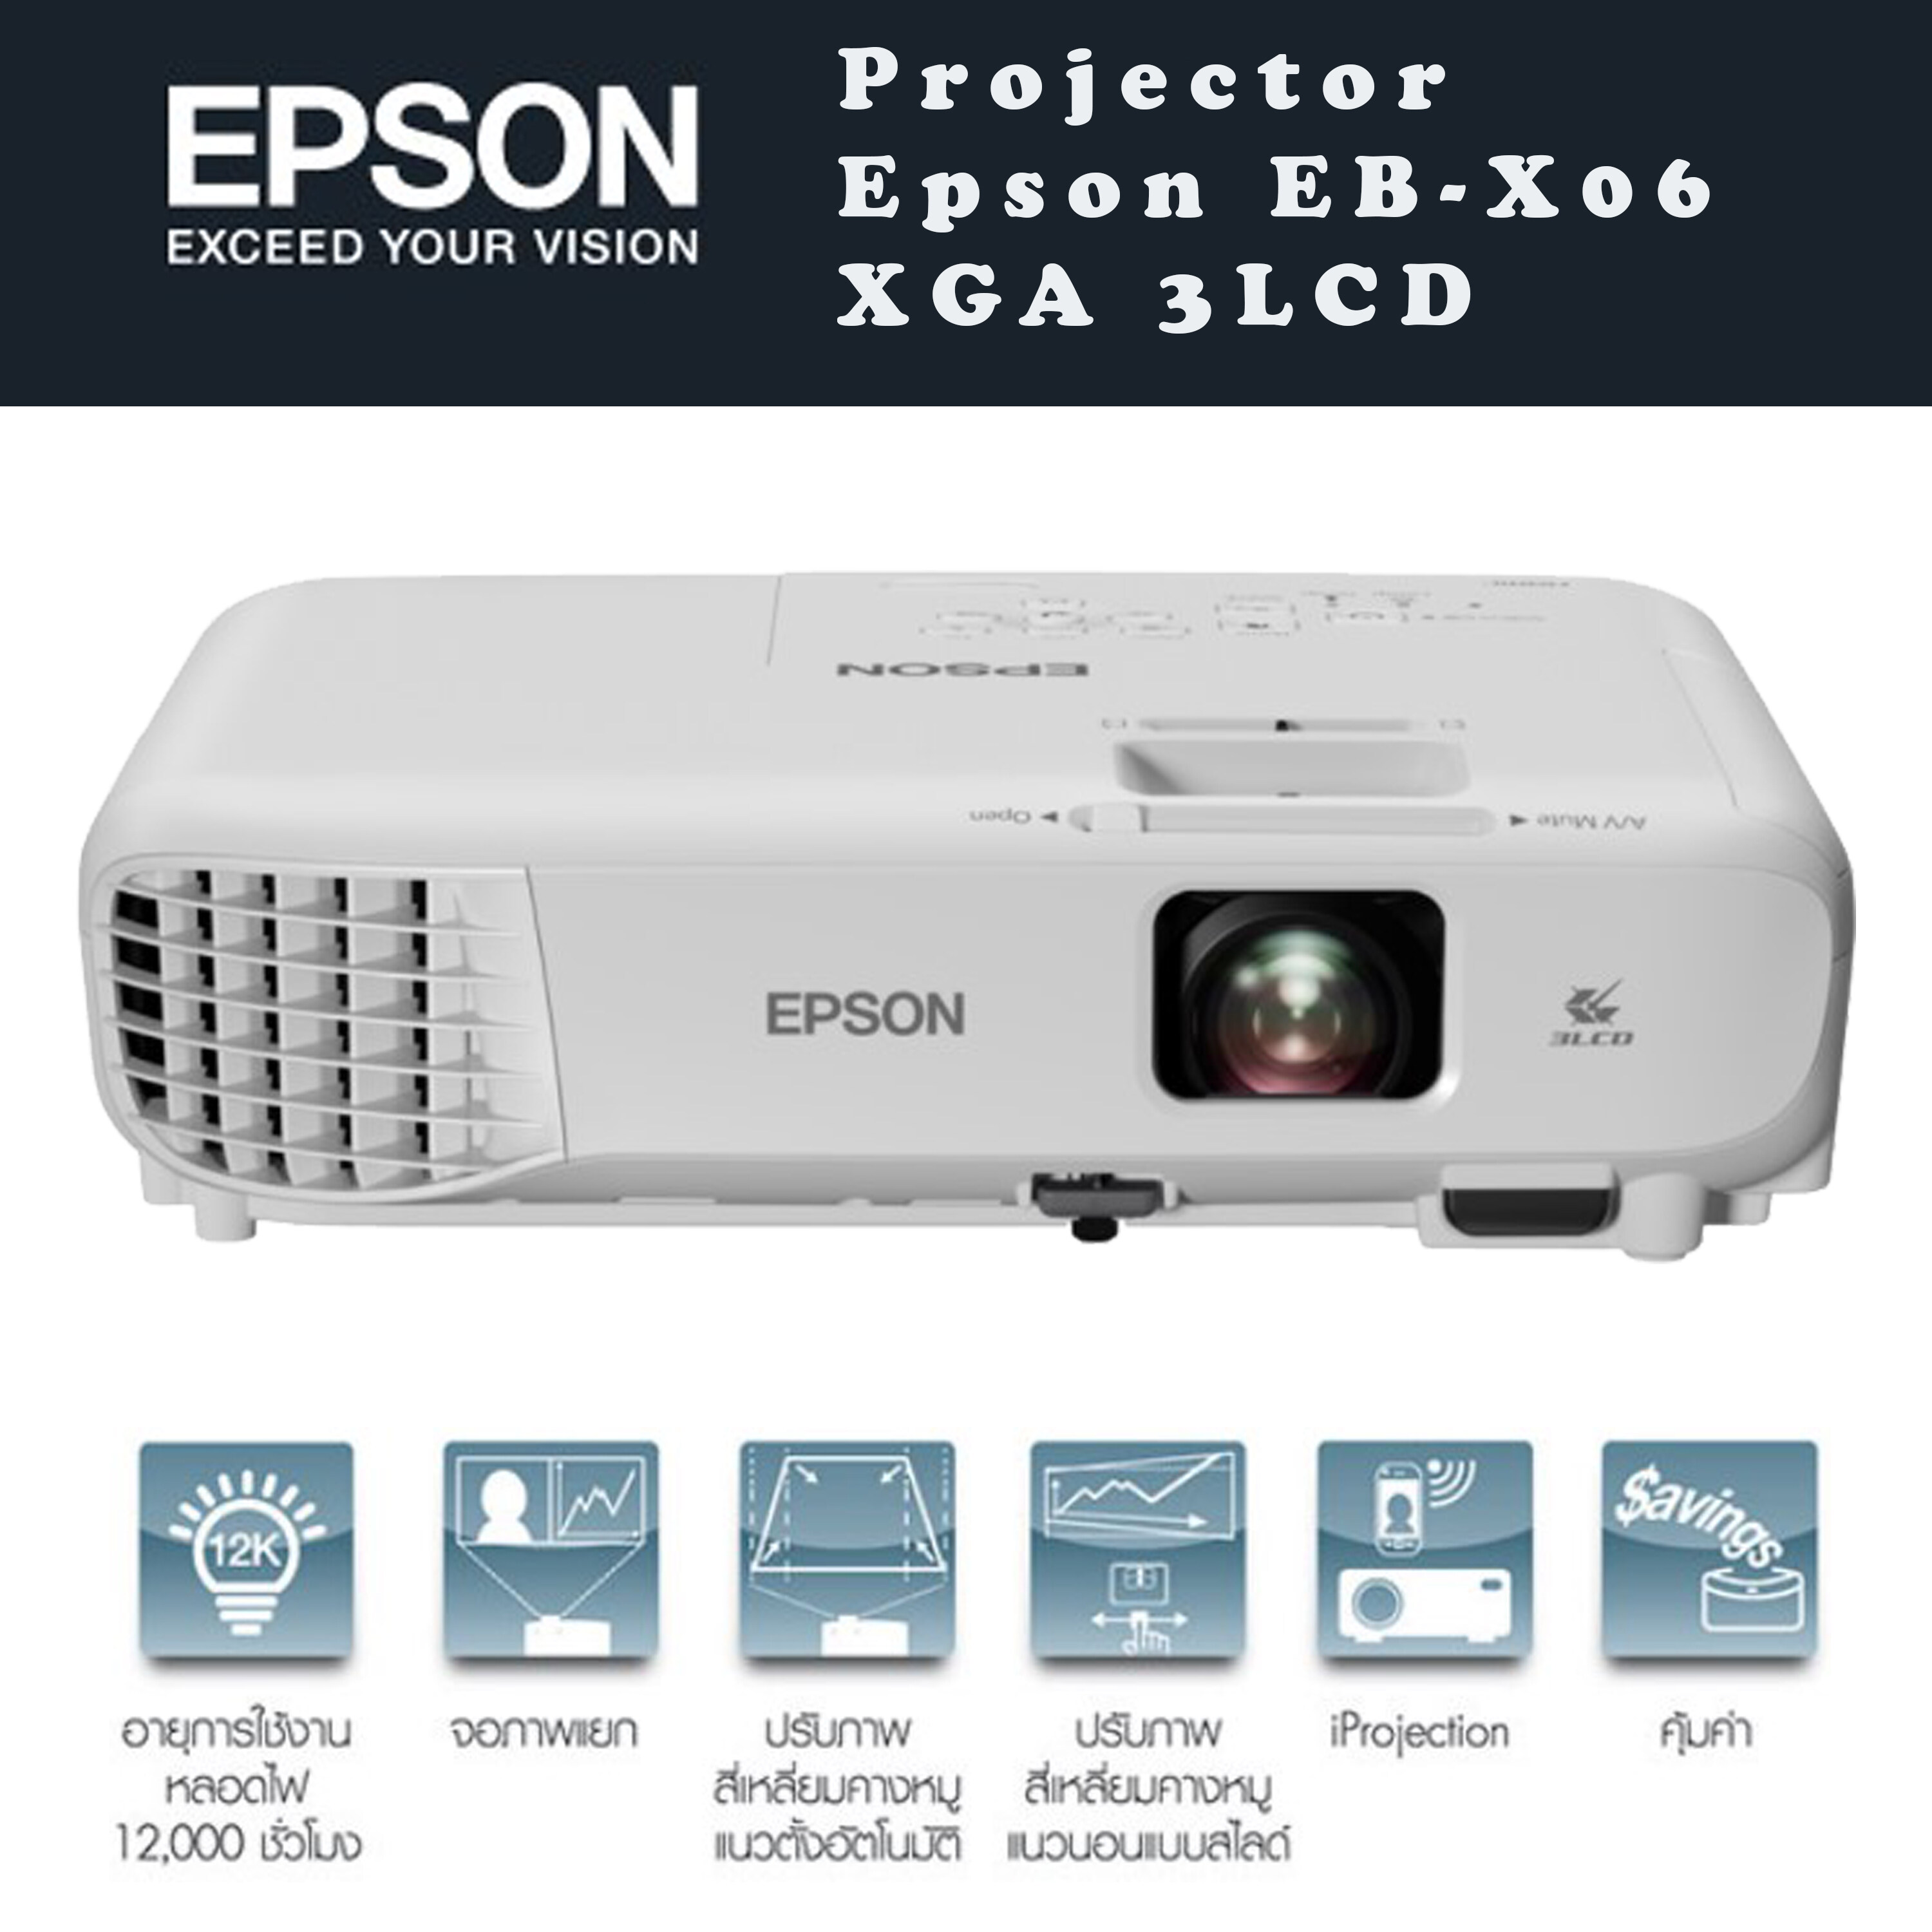 Projector Epson Eb X06 Xga 3lcd, How Do I Mirror My Ipad To Epson Projector